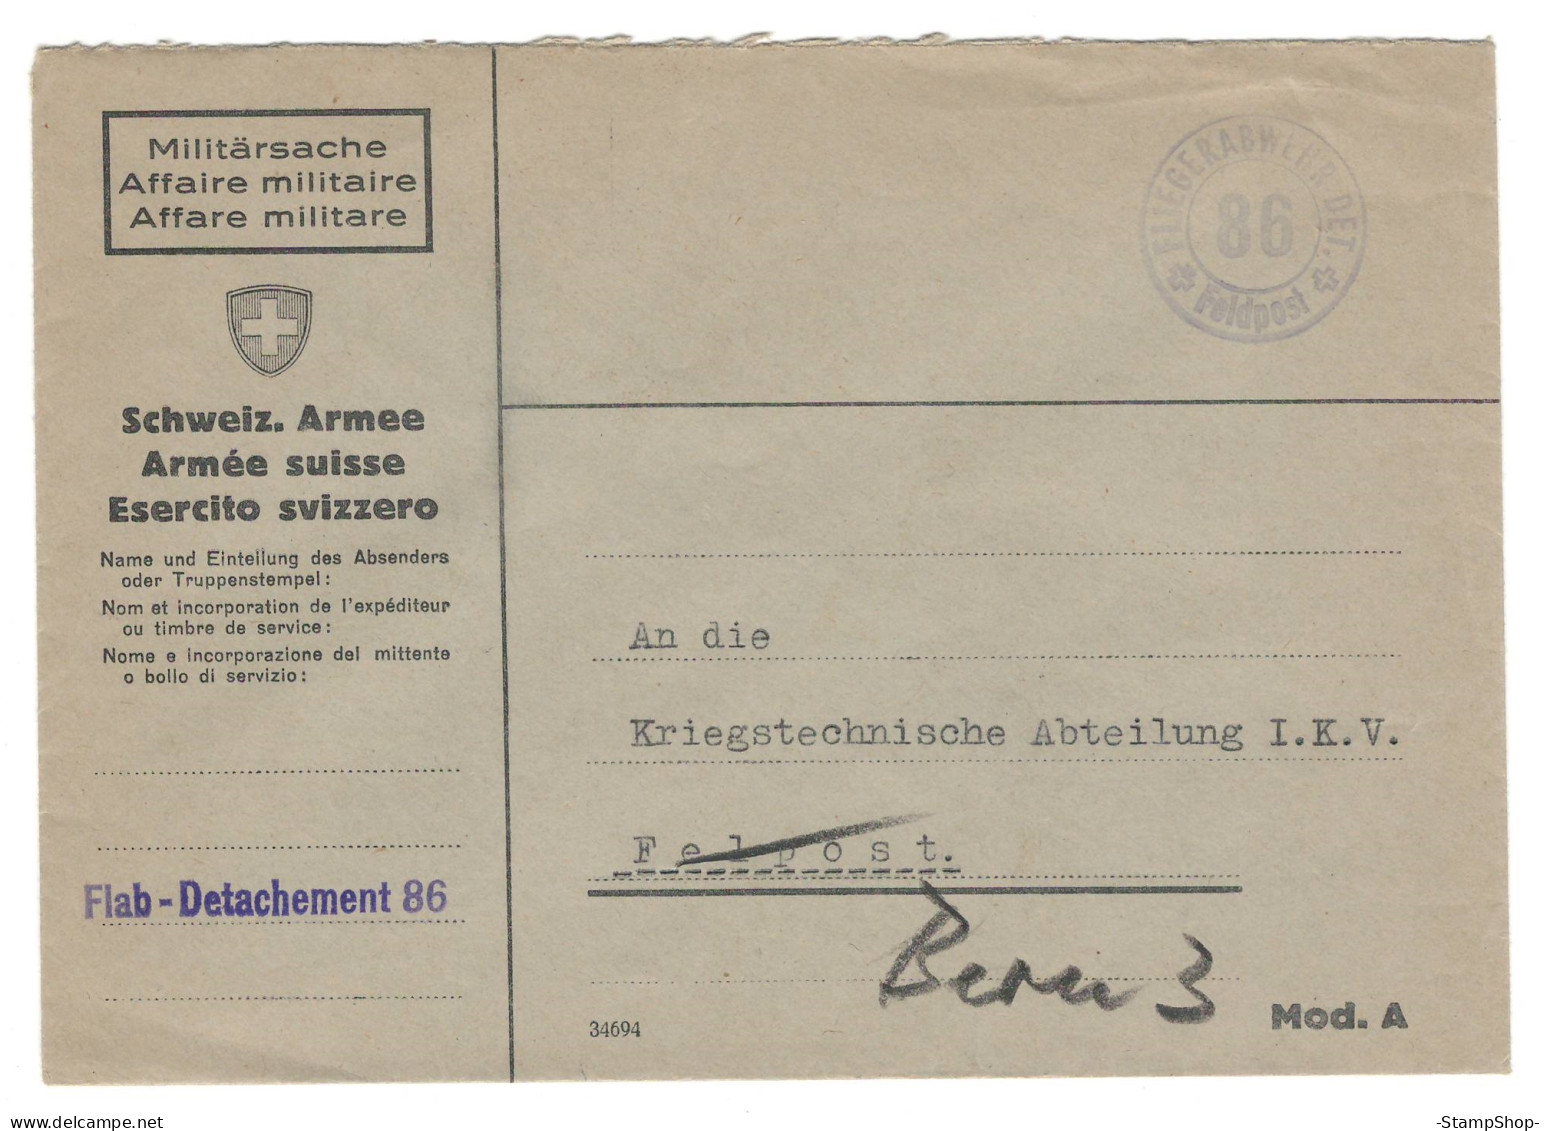 Feldpost, Militaria - Switzerland - FLIEGERAB (anti-aircraft) 86 - Cover Envelope - Postmarks